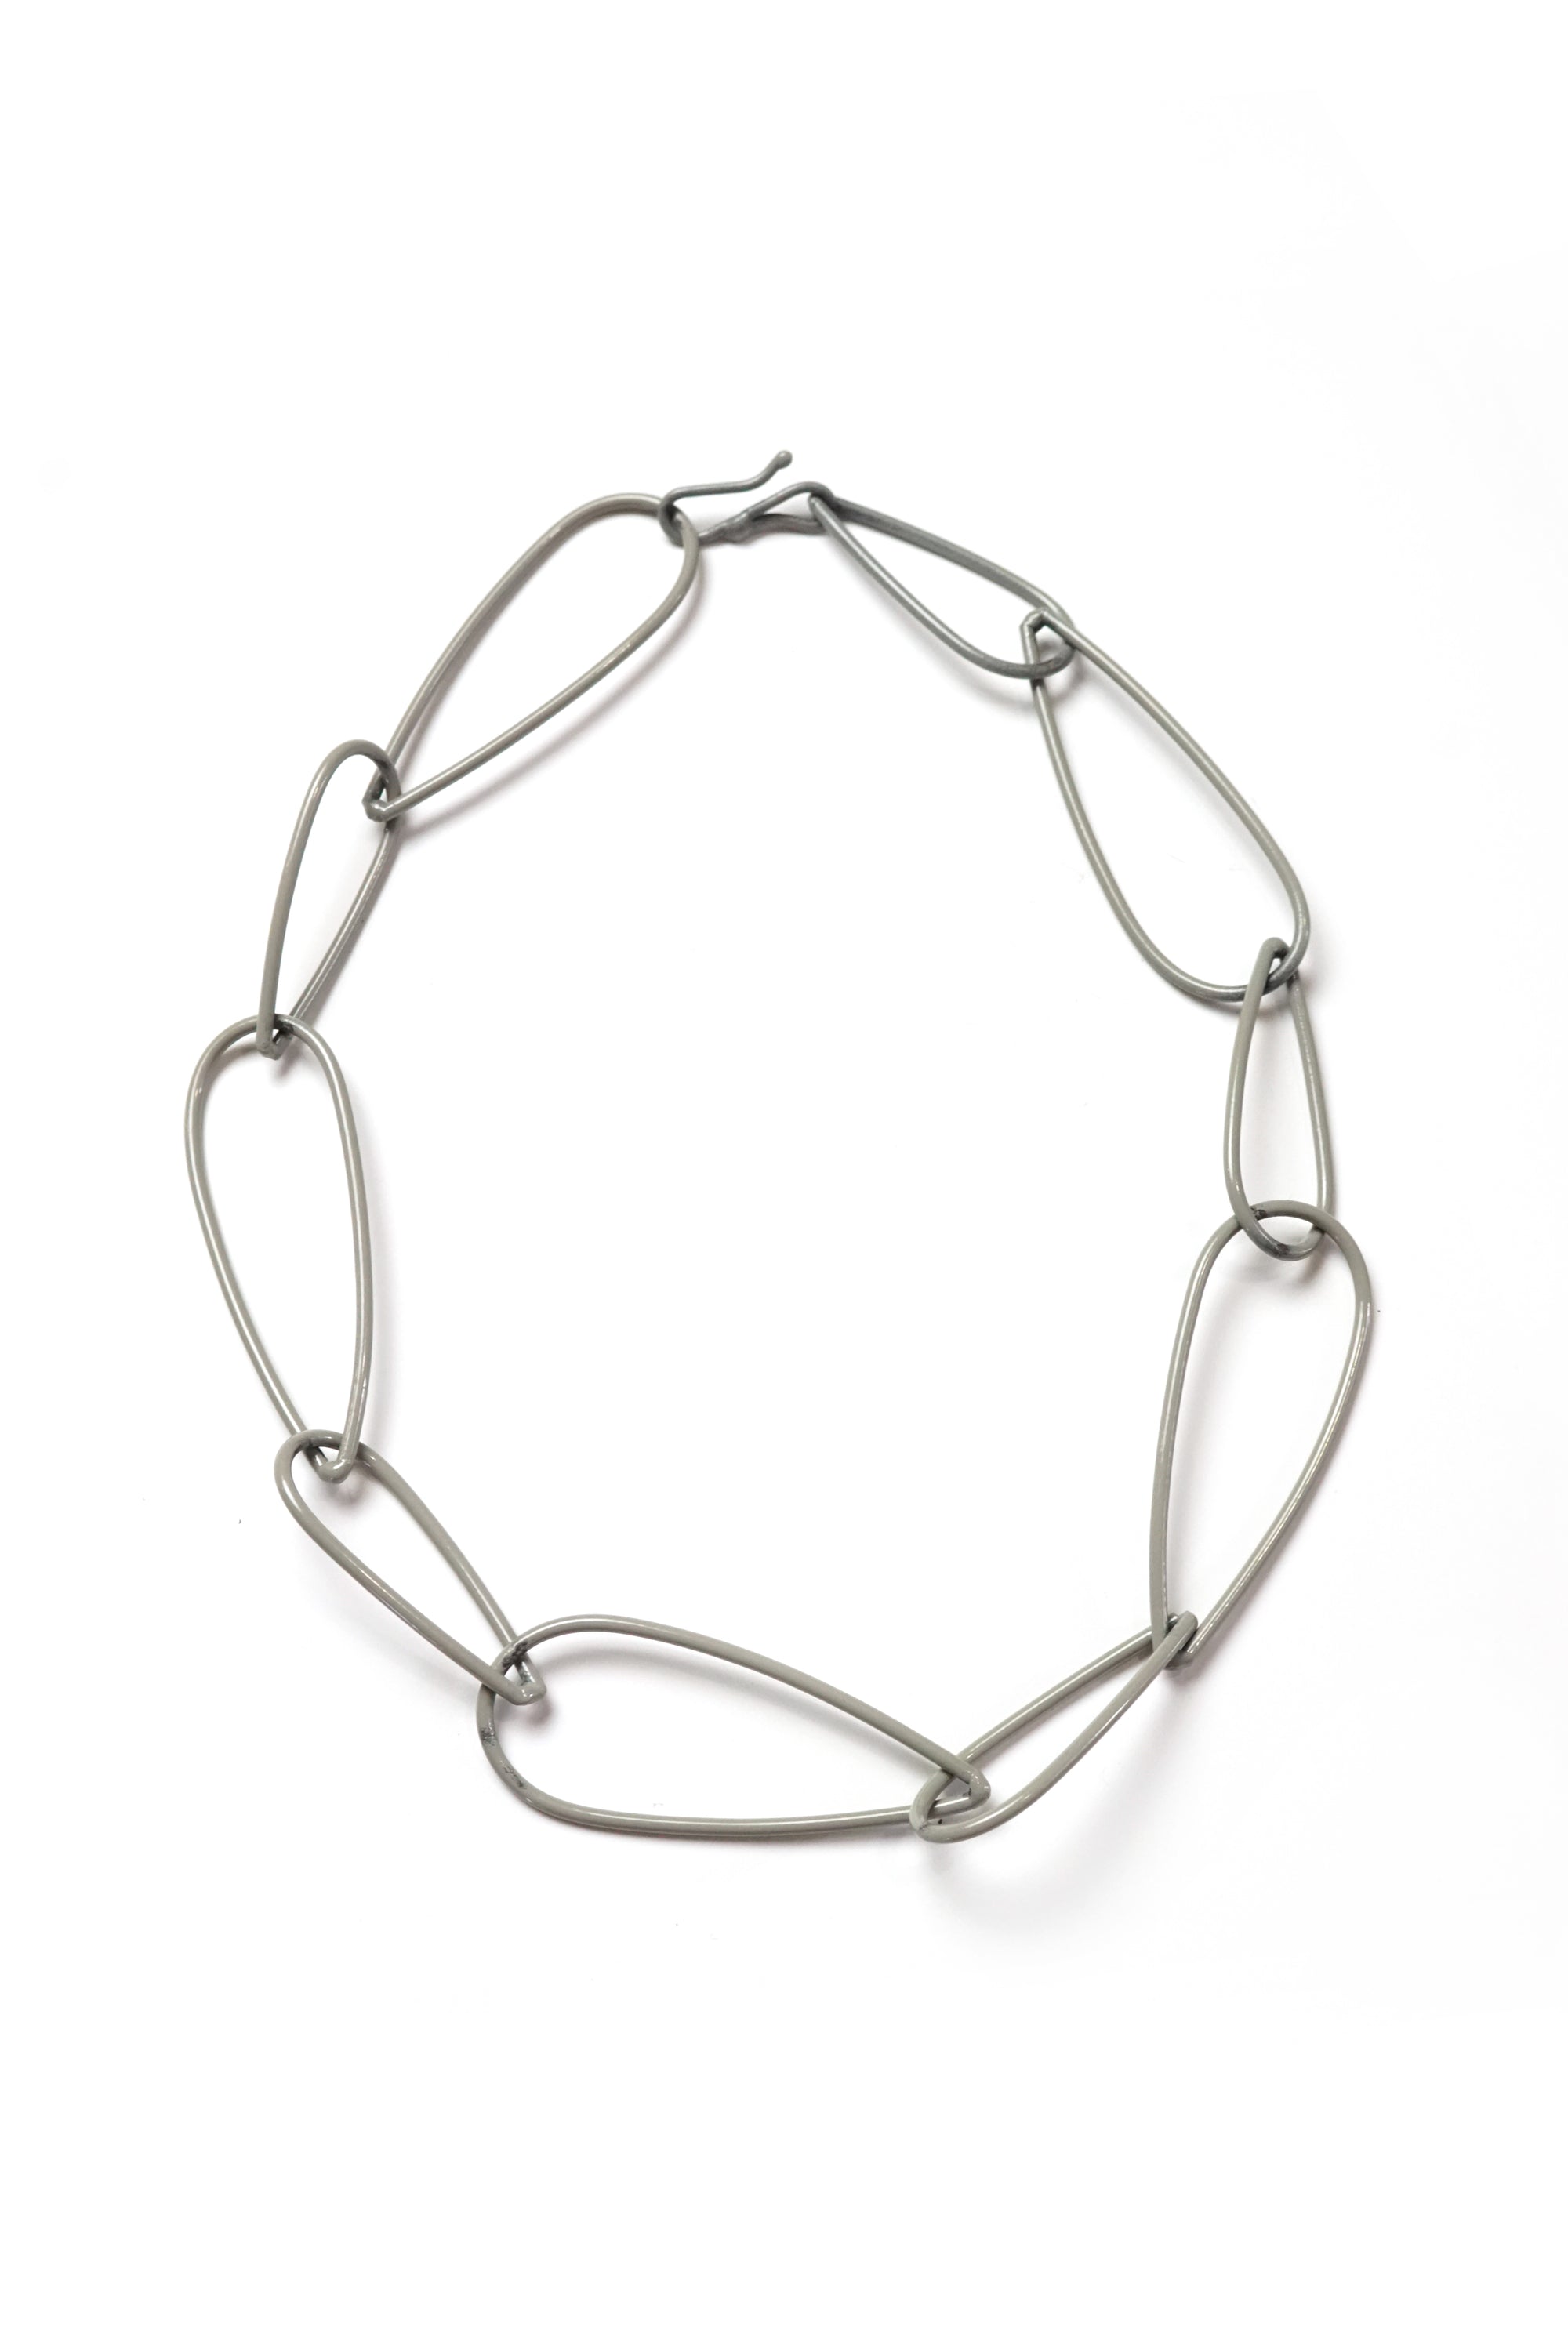 Modular Necklace No. 1 in Stone Grey